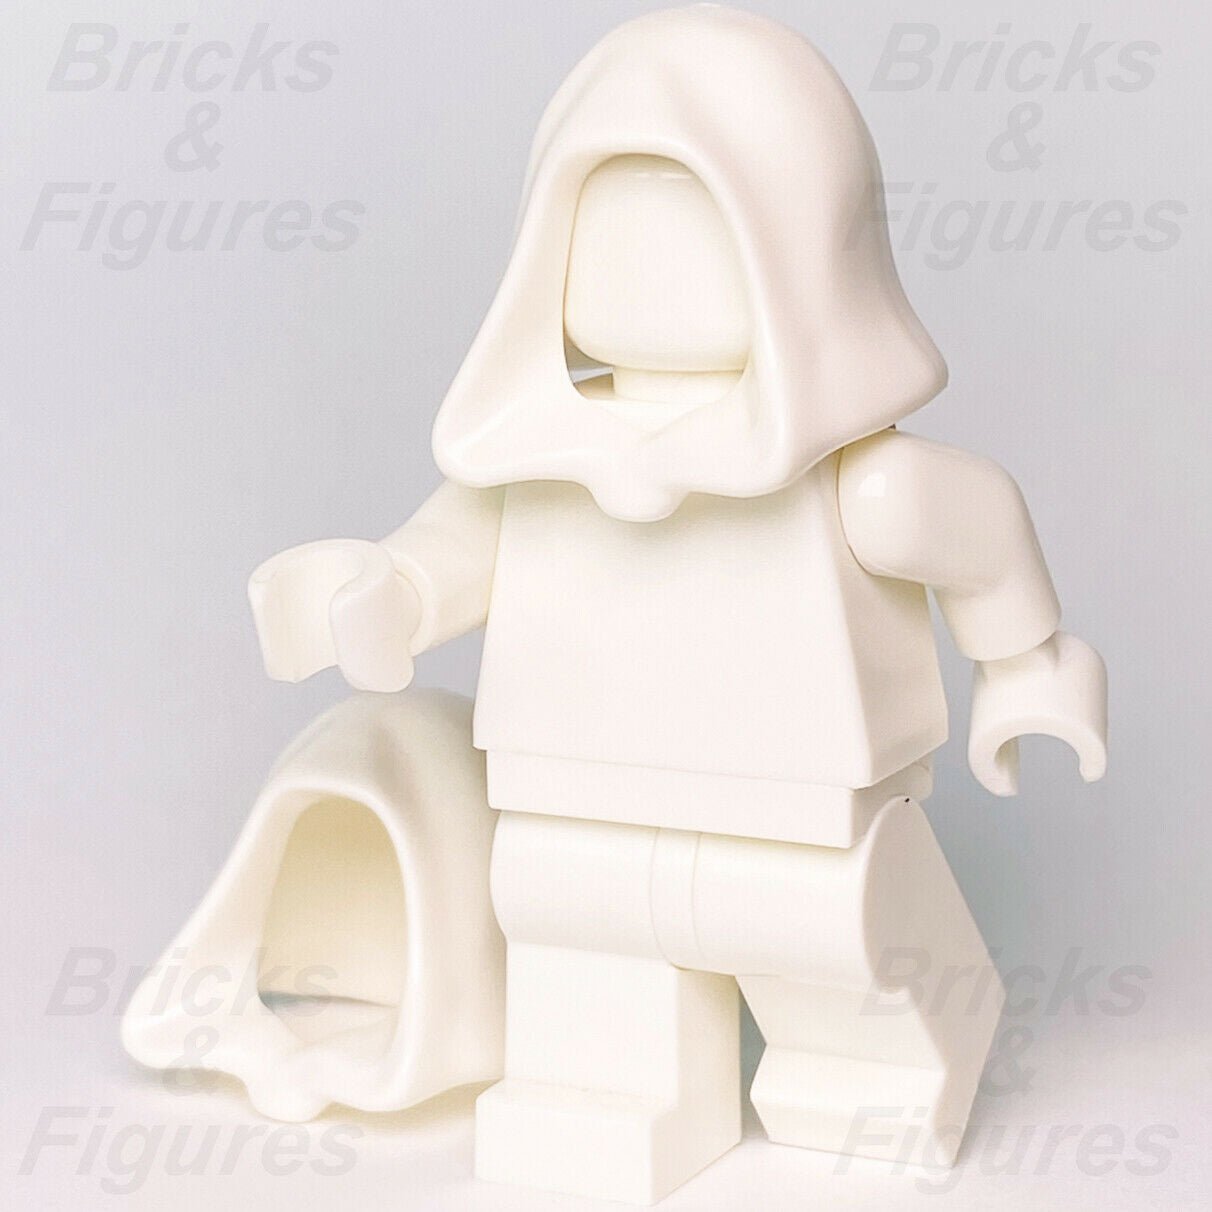 2 x Star Wars LEGO White Robe Hoods Minifigure Headgear Parts 30381 96232 98011 - Bricks & Figures